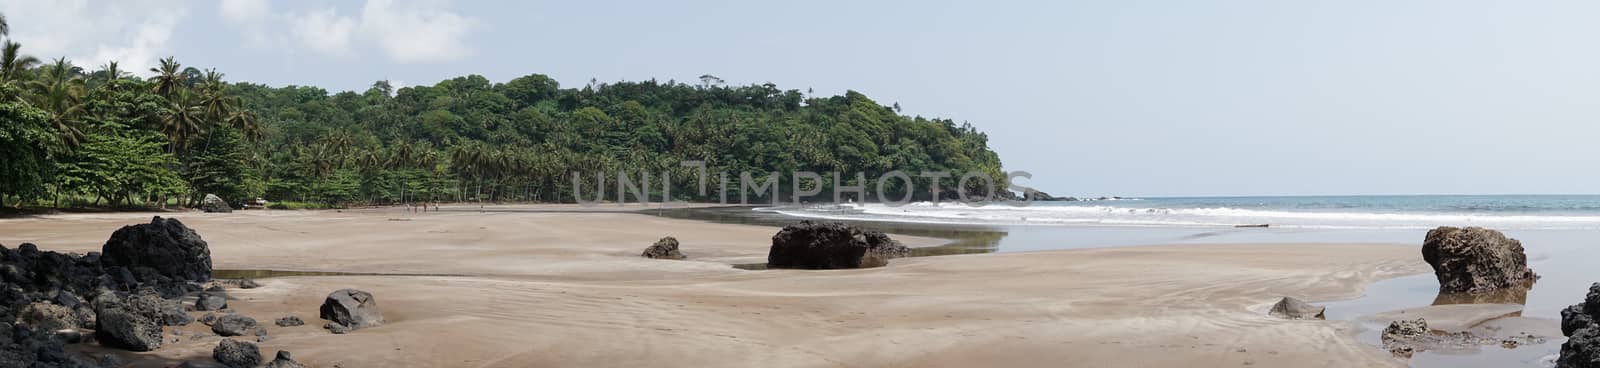 Seven Wave Beach, Sao Tome and Principe by alfotokunst